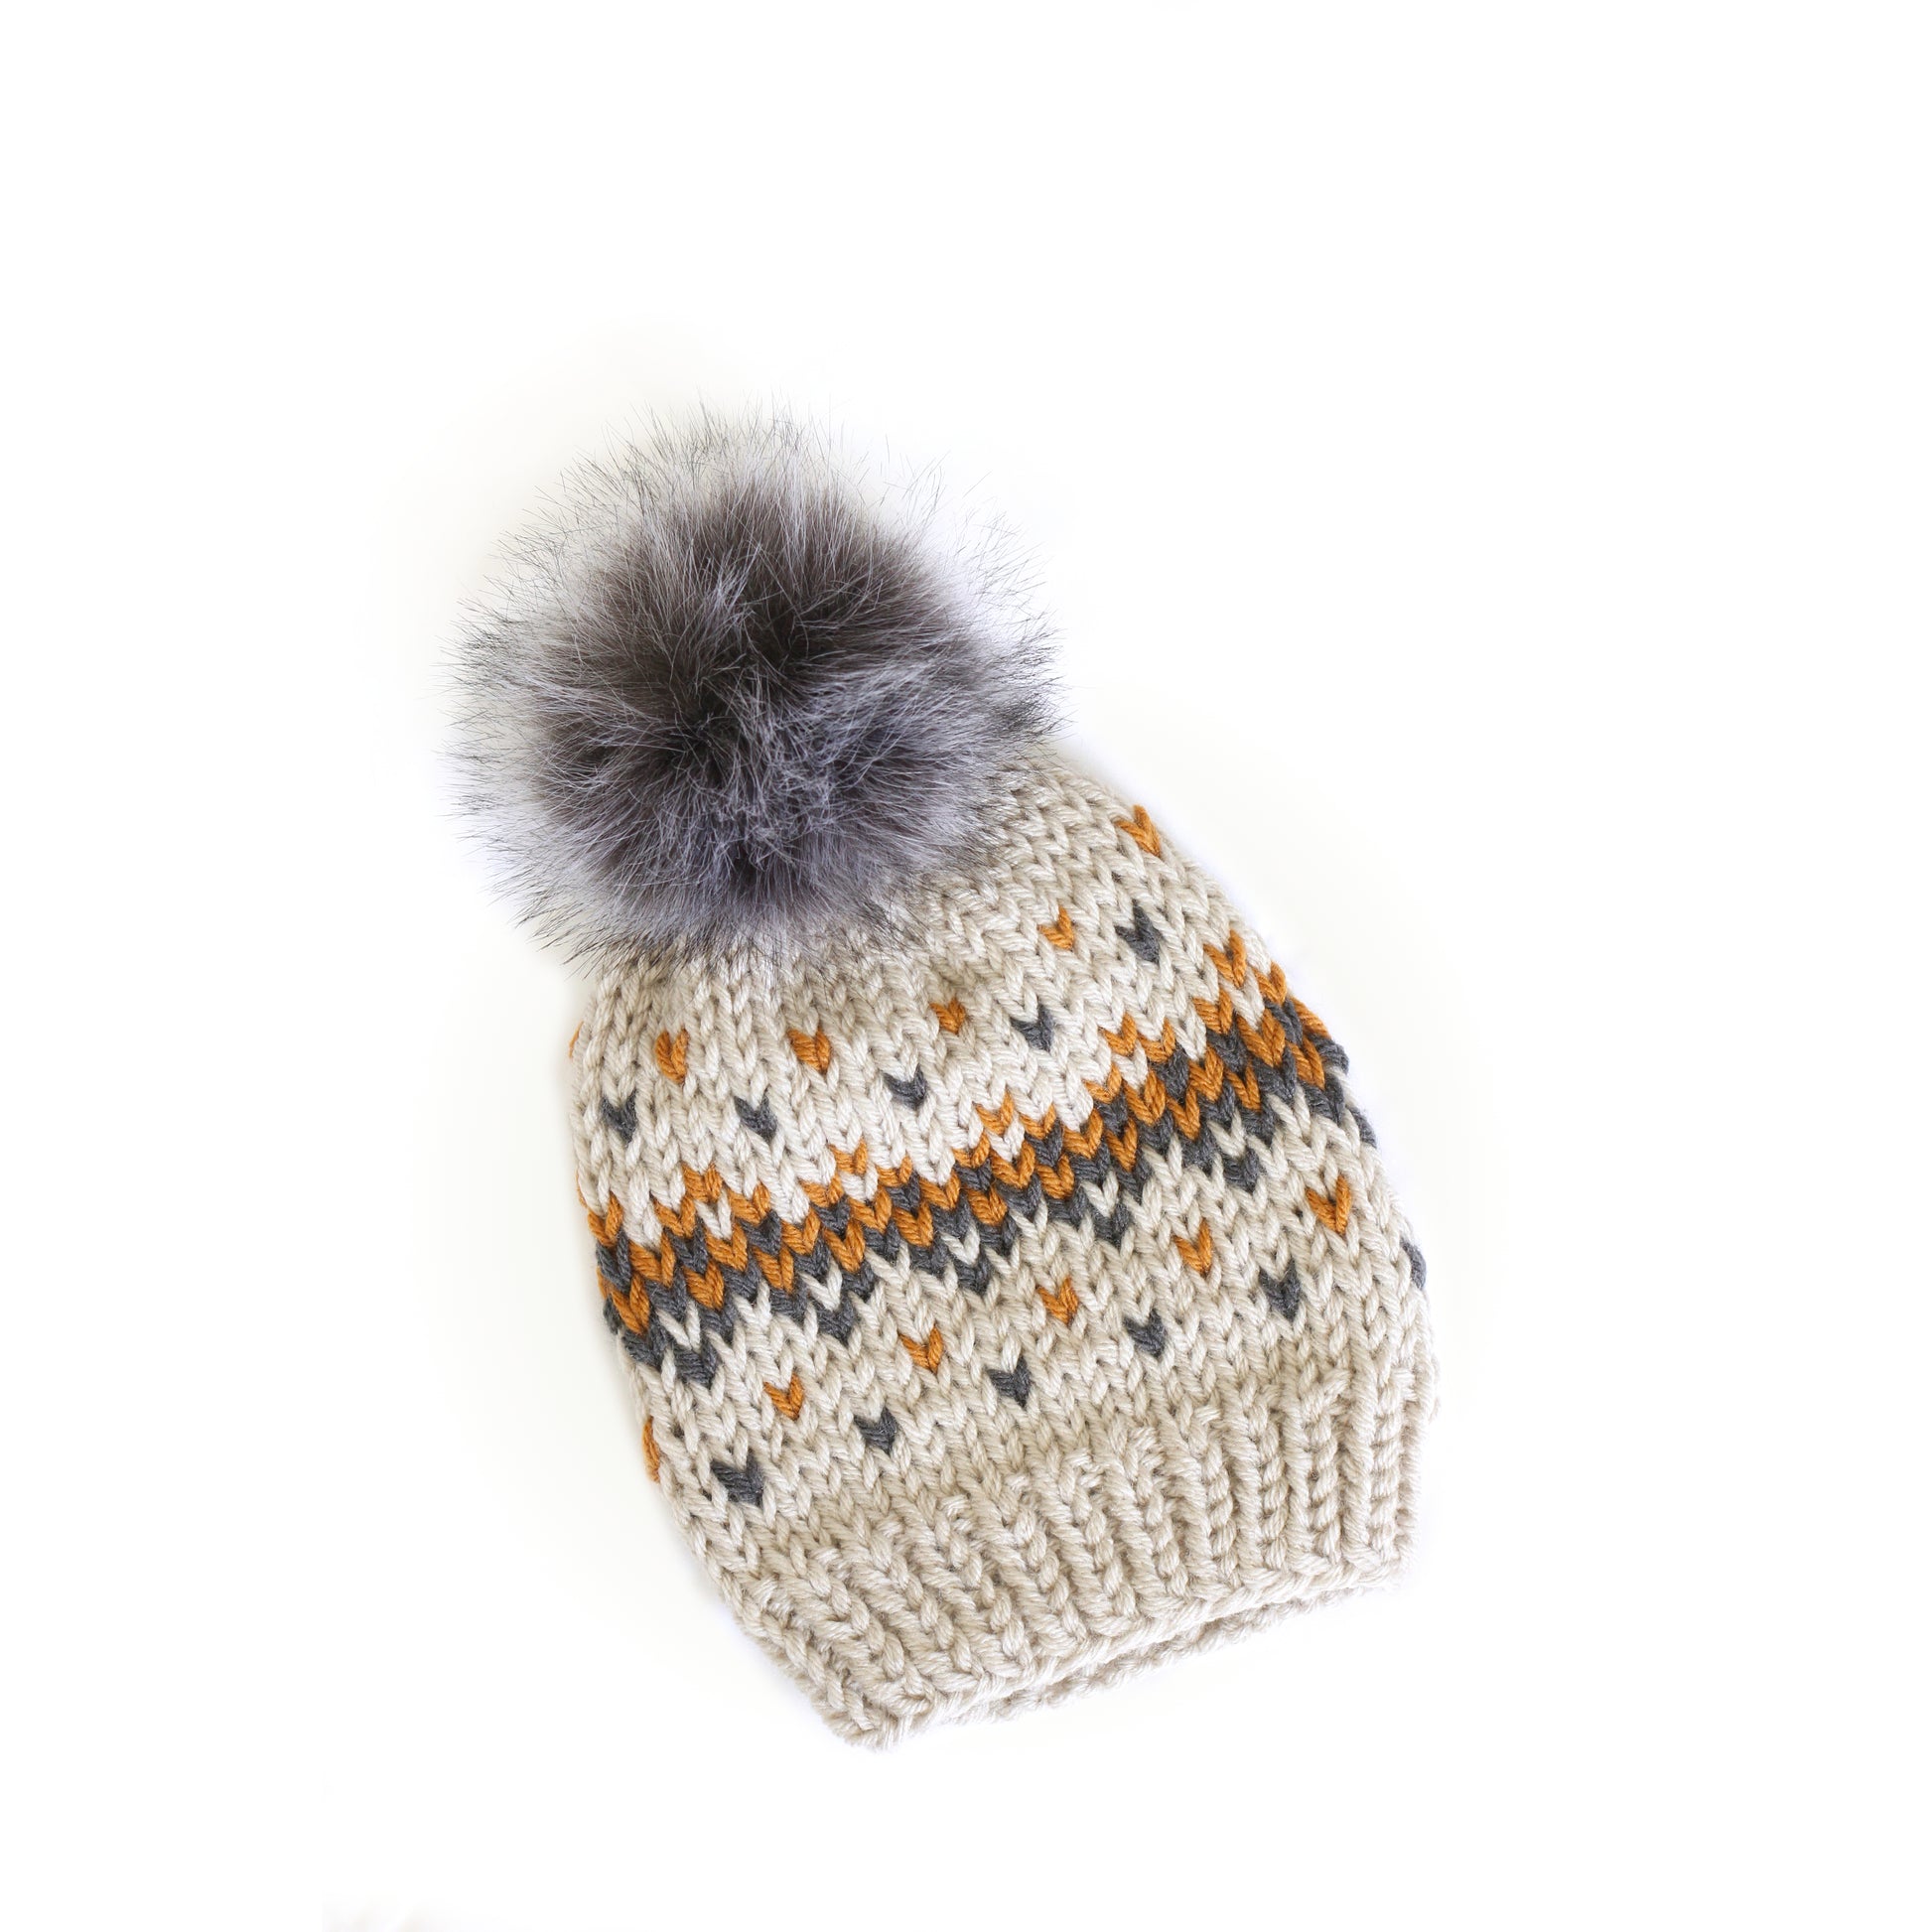 Knit hat pattern